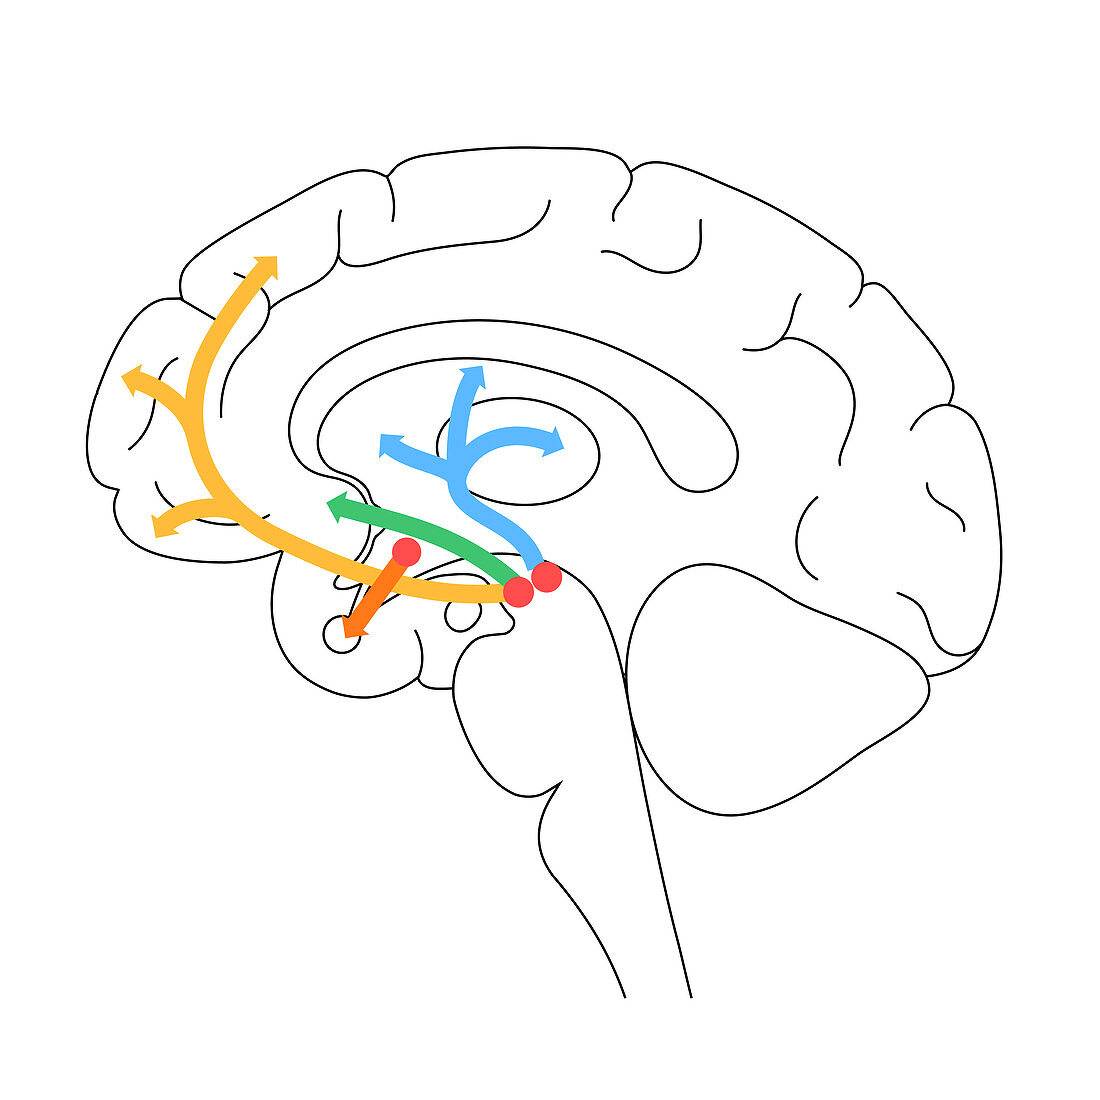 Dopamine pathway, illustration